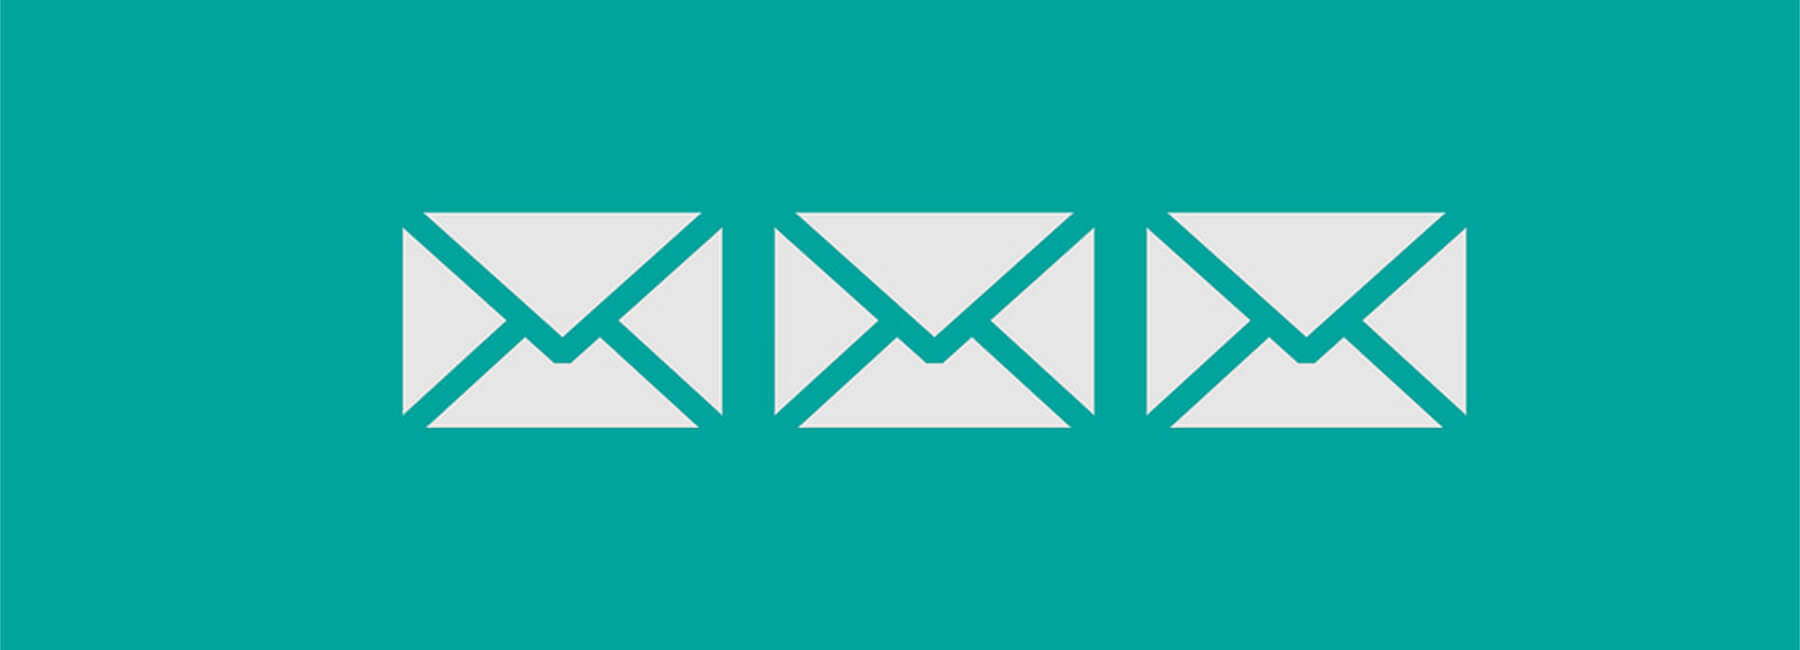 Hoe verzamel je e-mail campaign feedback?